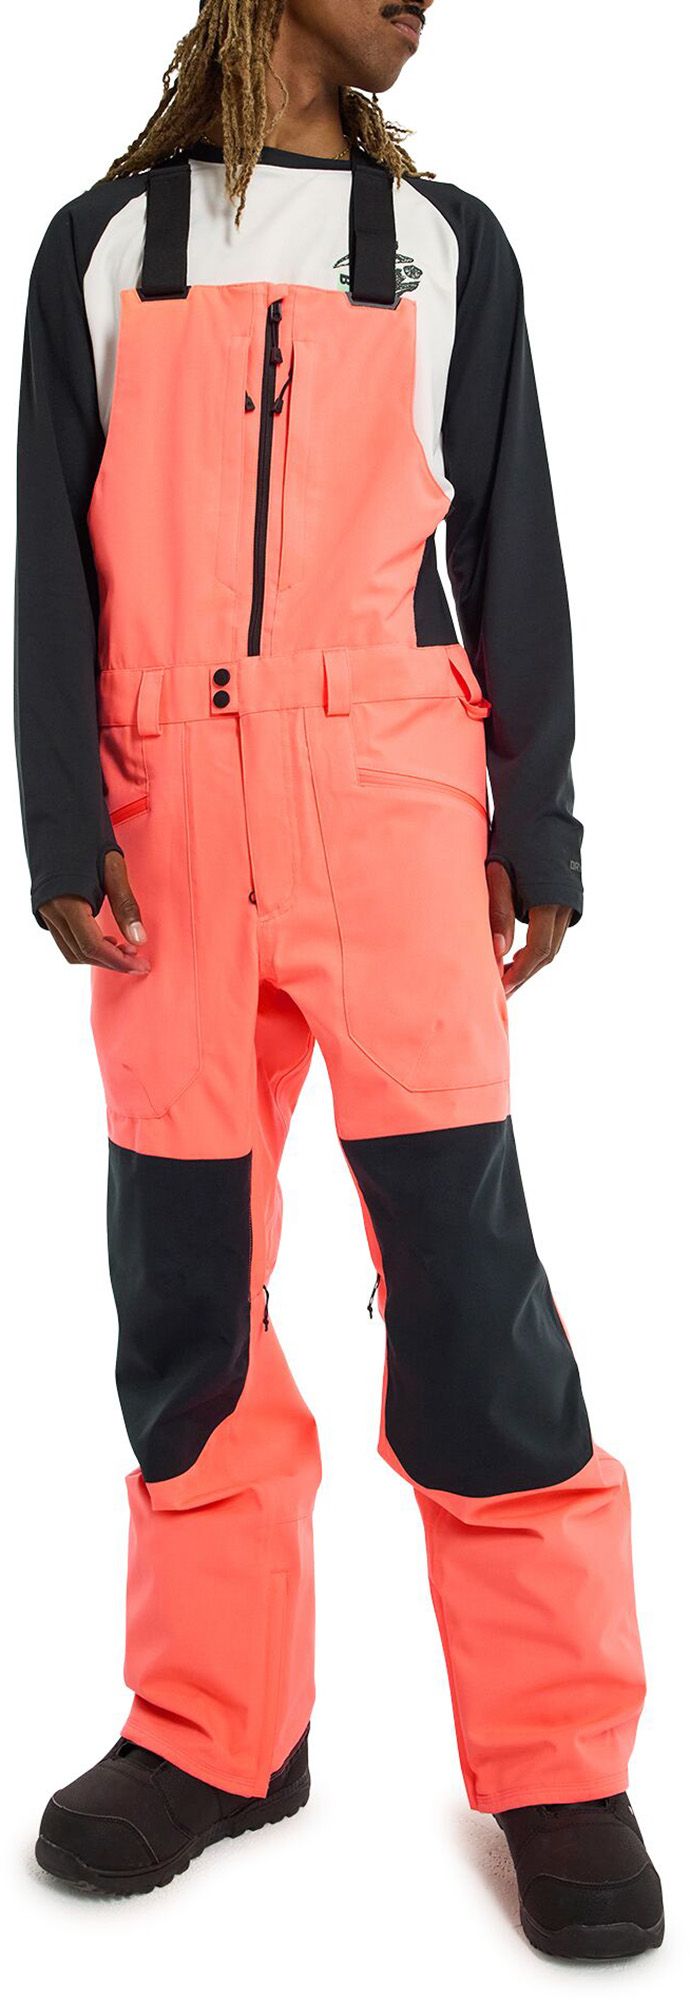 Burton Men's Reserve Bib Pants, Medium, Tetra Orange/True Black | Holiday Gift